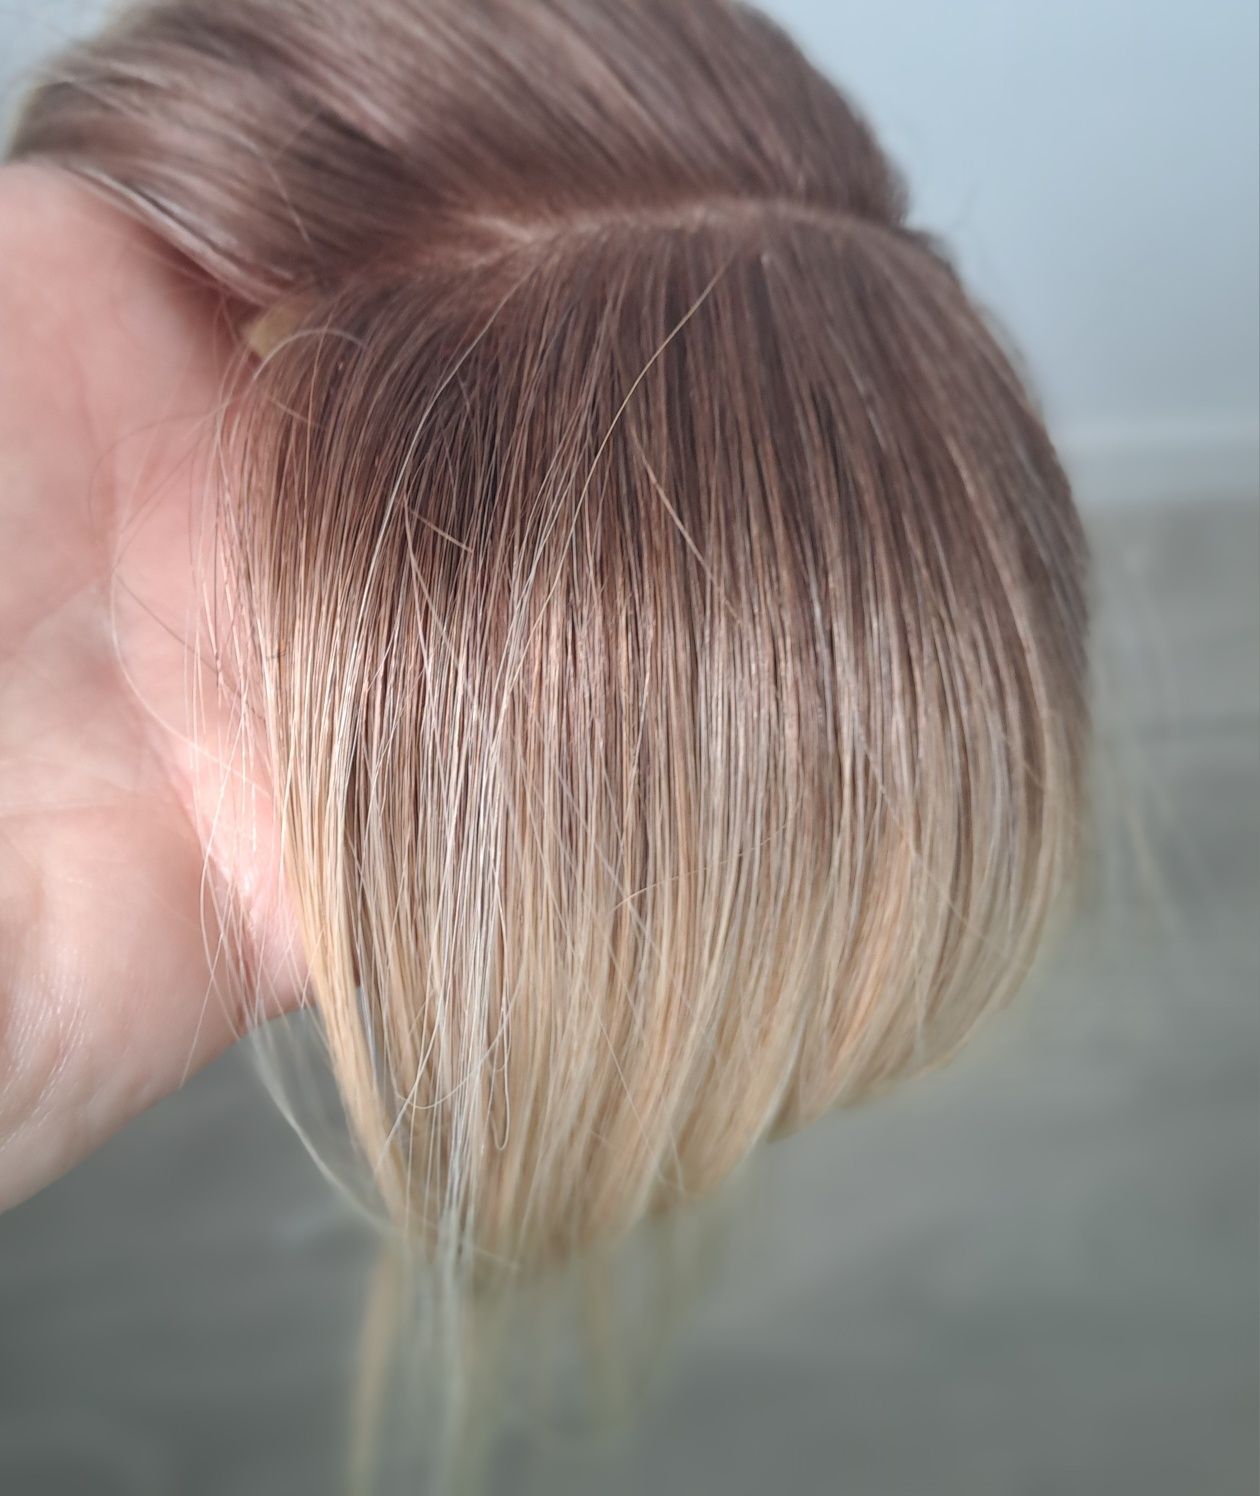 Topper mini, tupet blond ombre naturalne włosy, delikatna grzywka